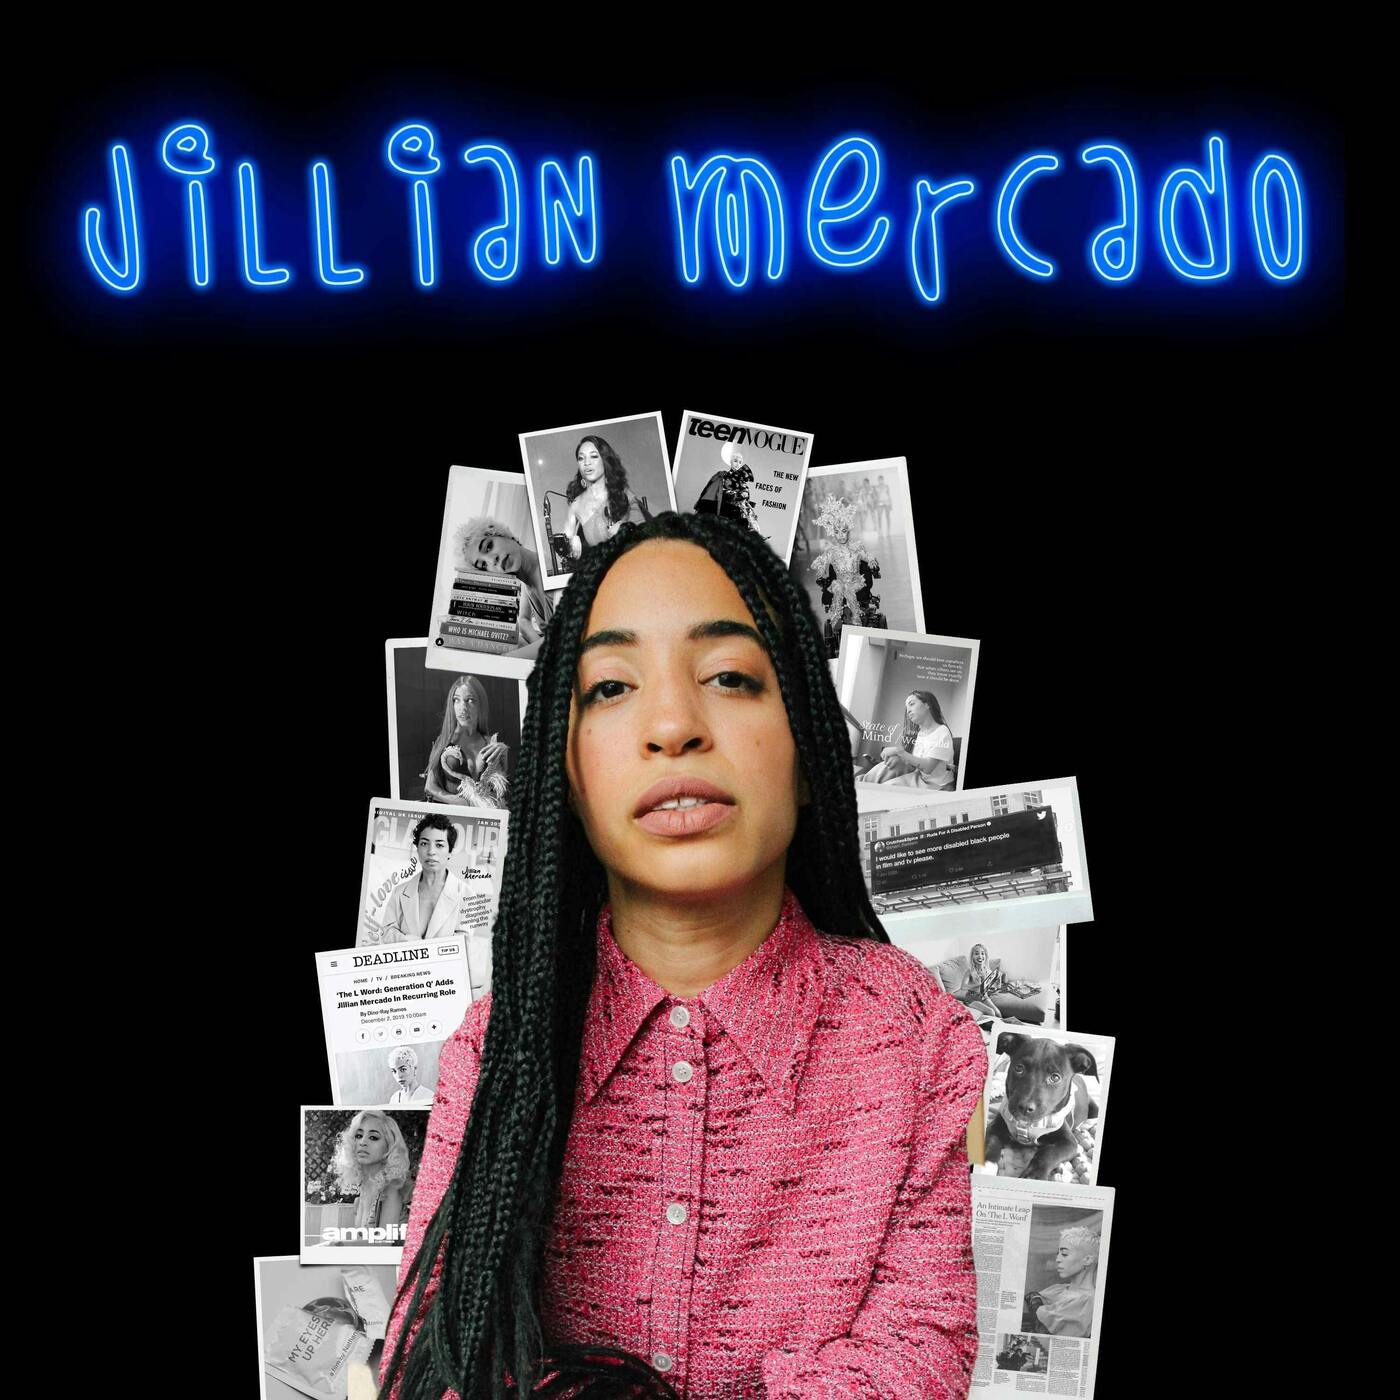 Vulnerable EP53: The L Word’s Jillian Mercado on Fighting the Stigma